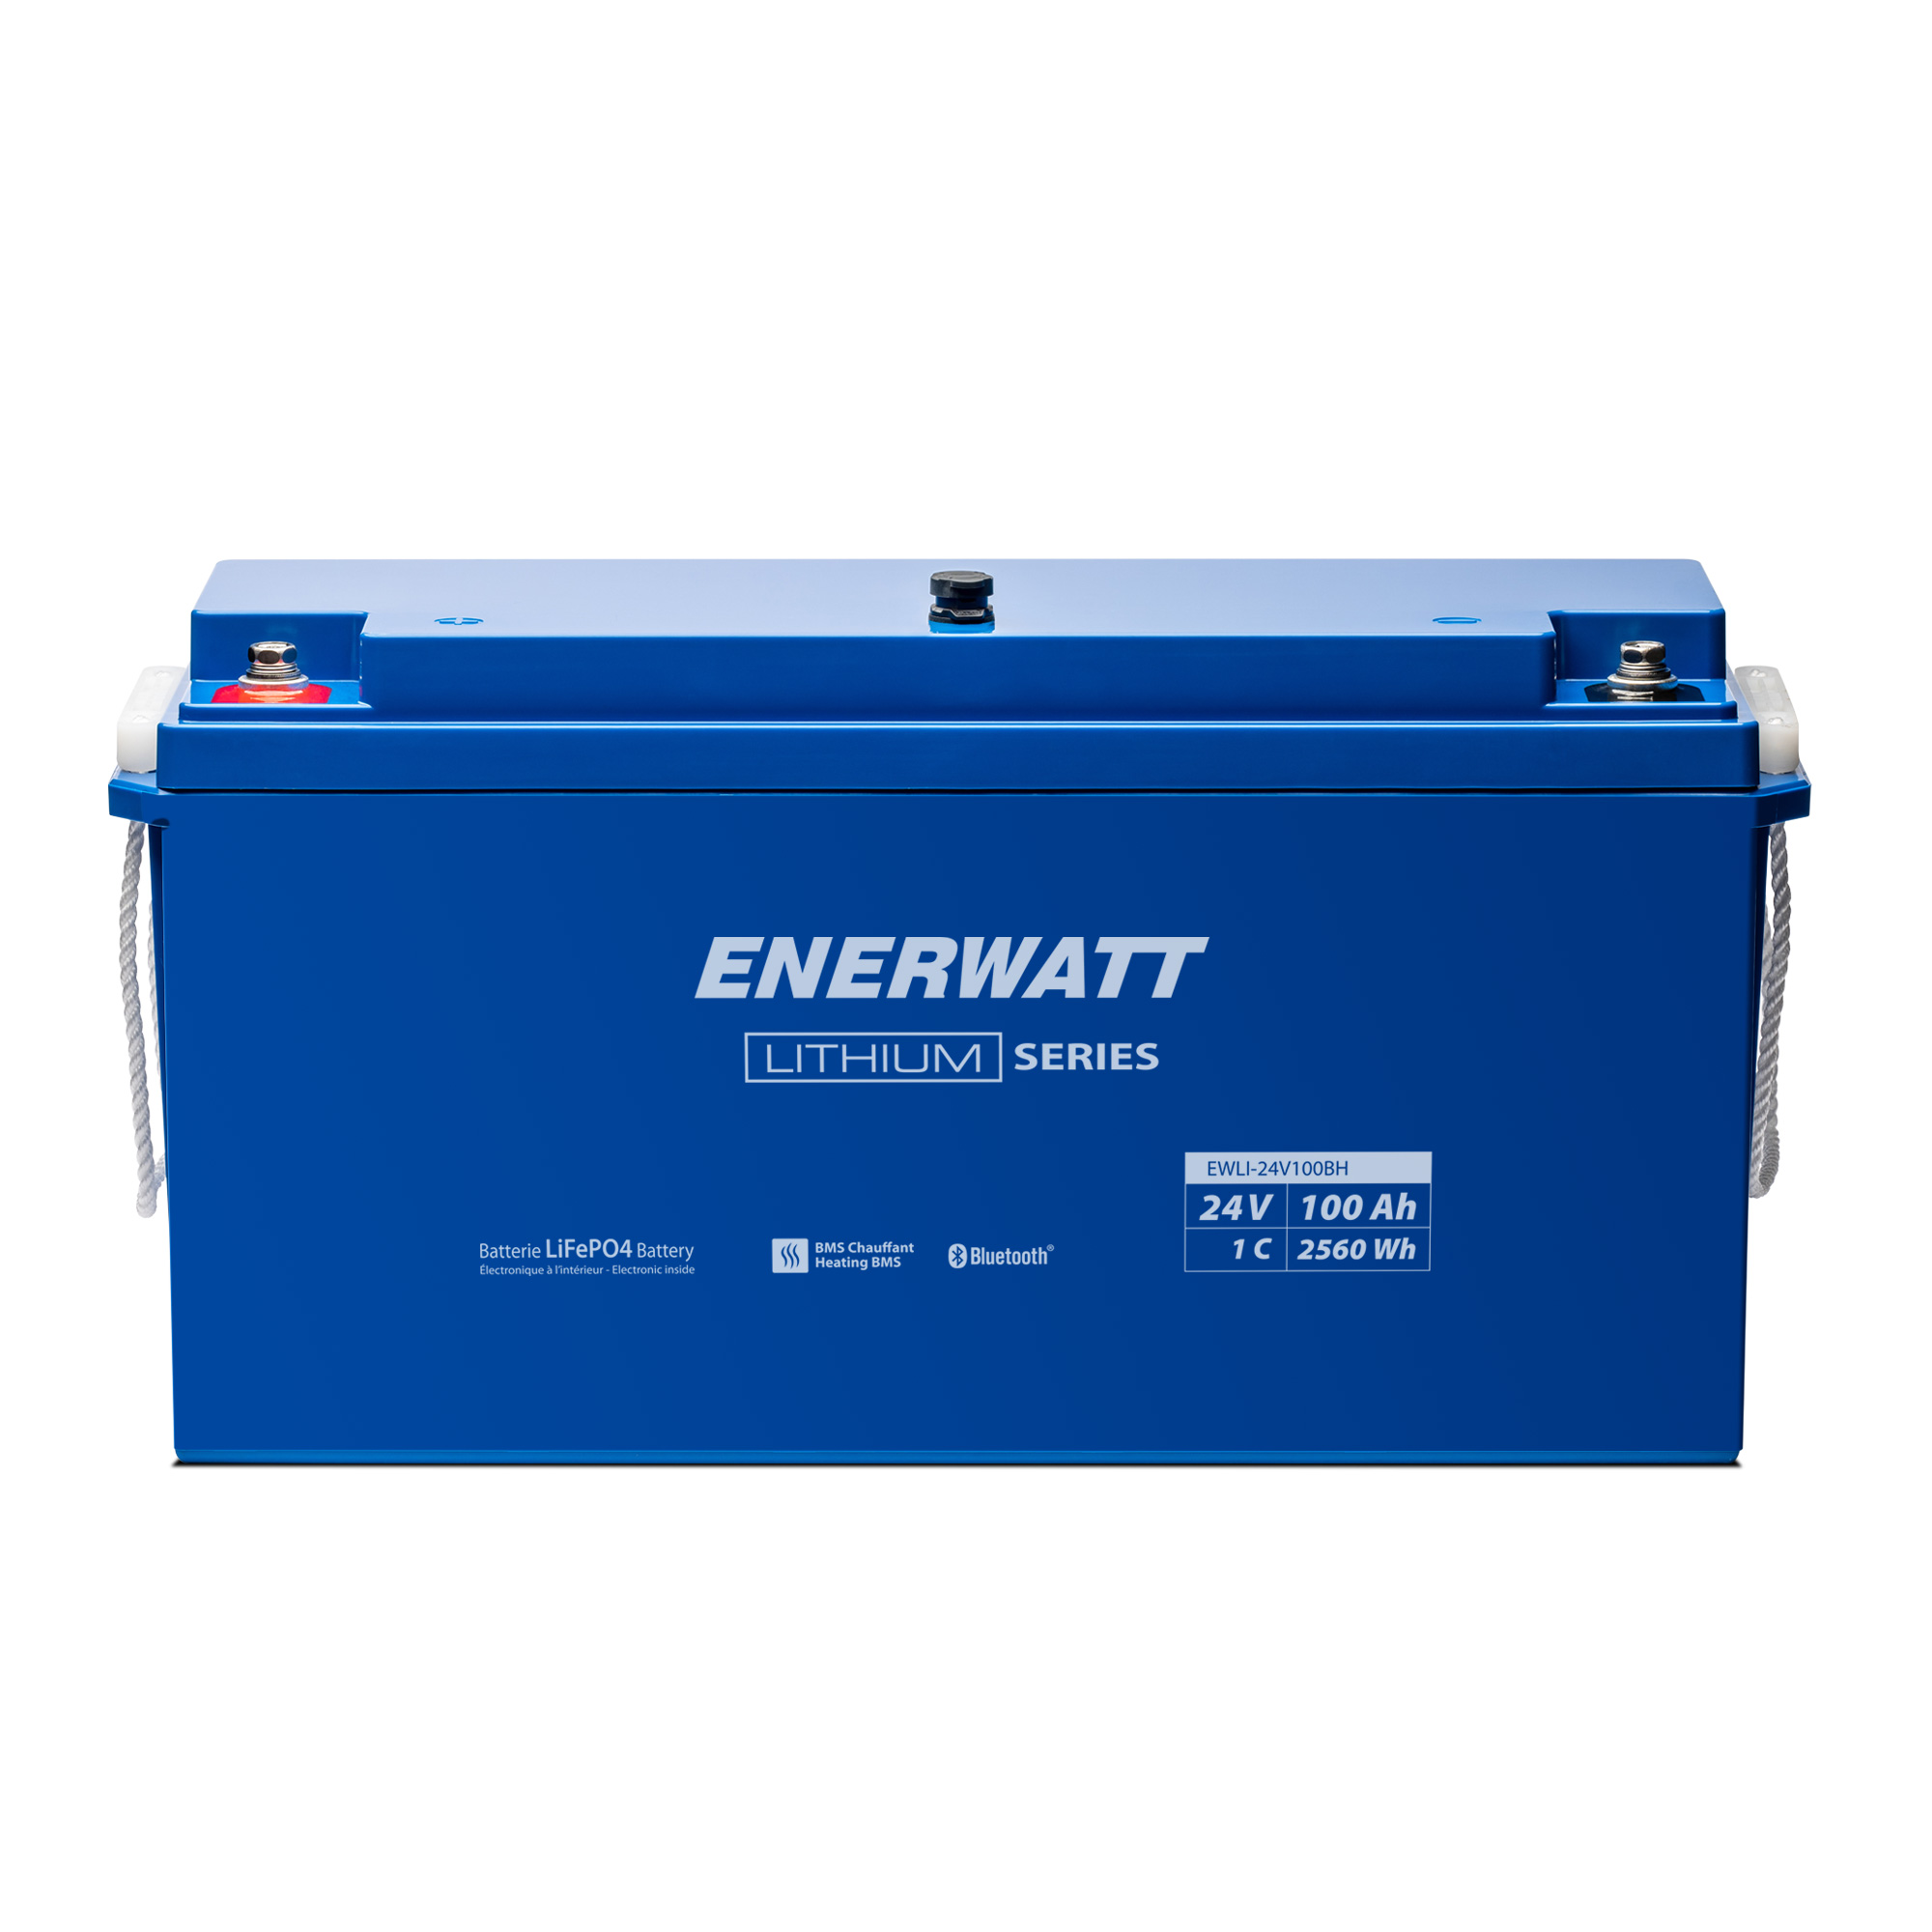 EWLI-24V100BH Batterie LiFePO4 GR N120 24V 100Ah 1C Bluetooth et